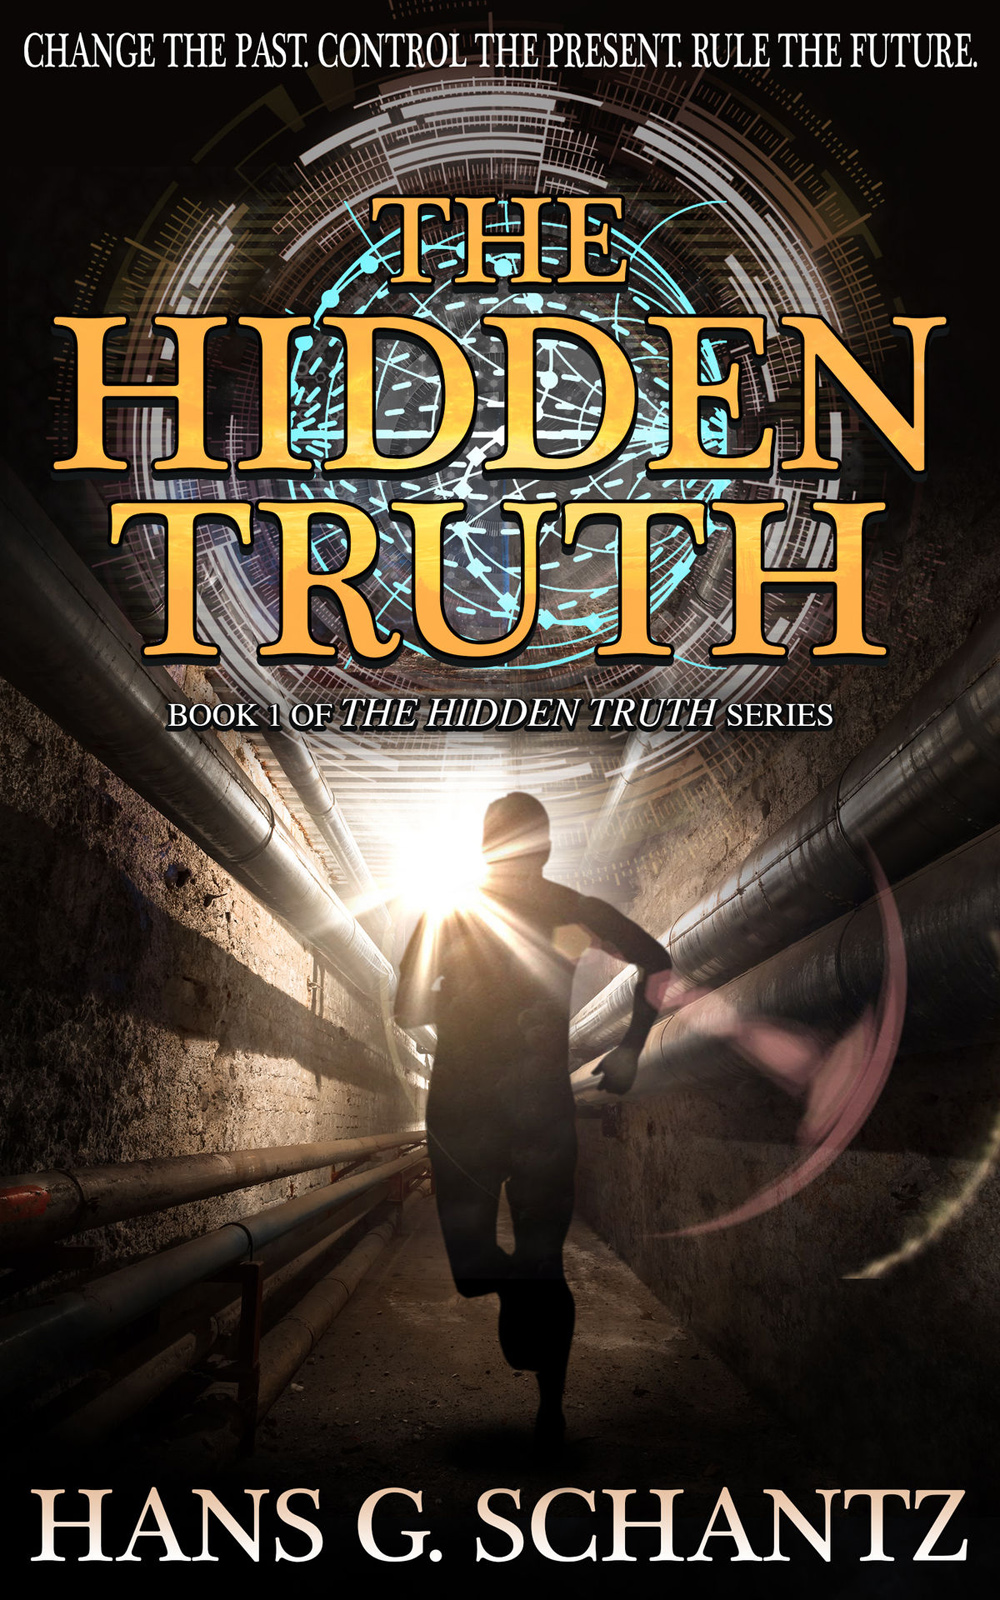 A shadowy figure runs through a corridor on the cover of 'The Hidden Truth.'